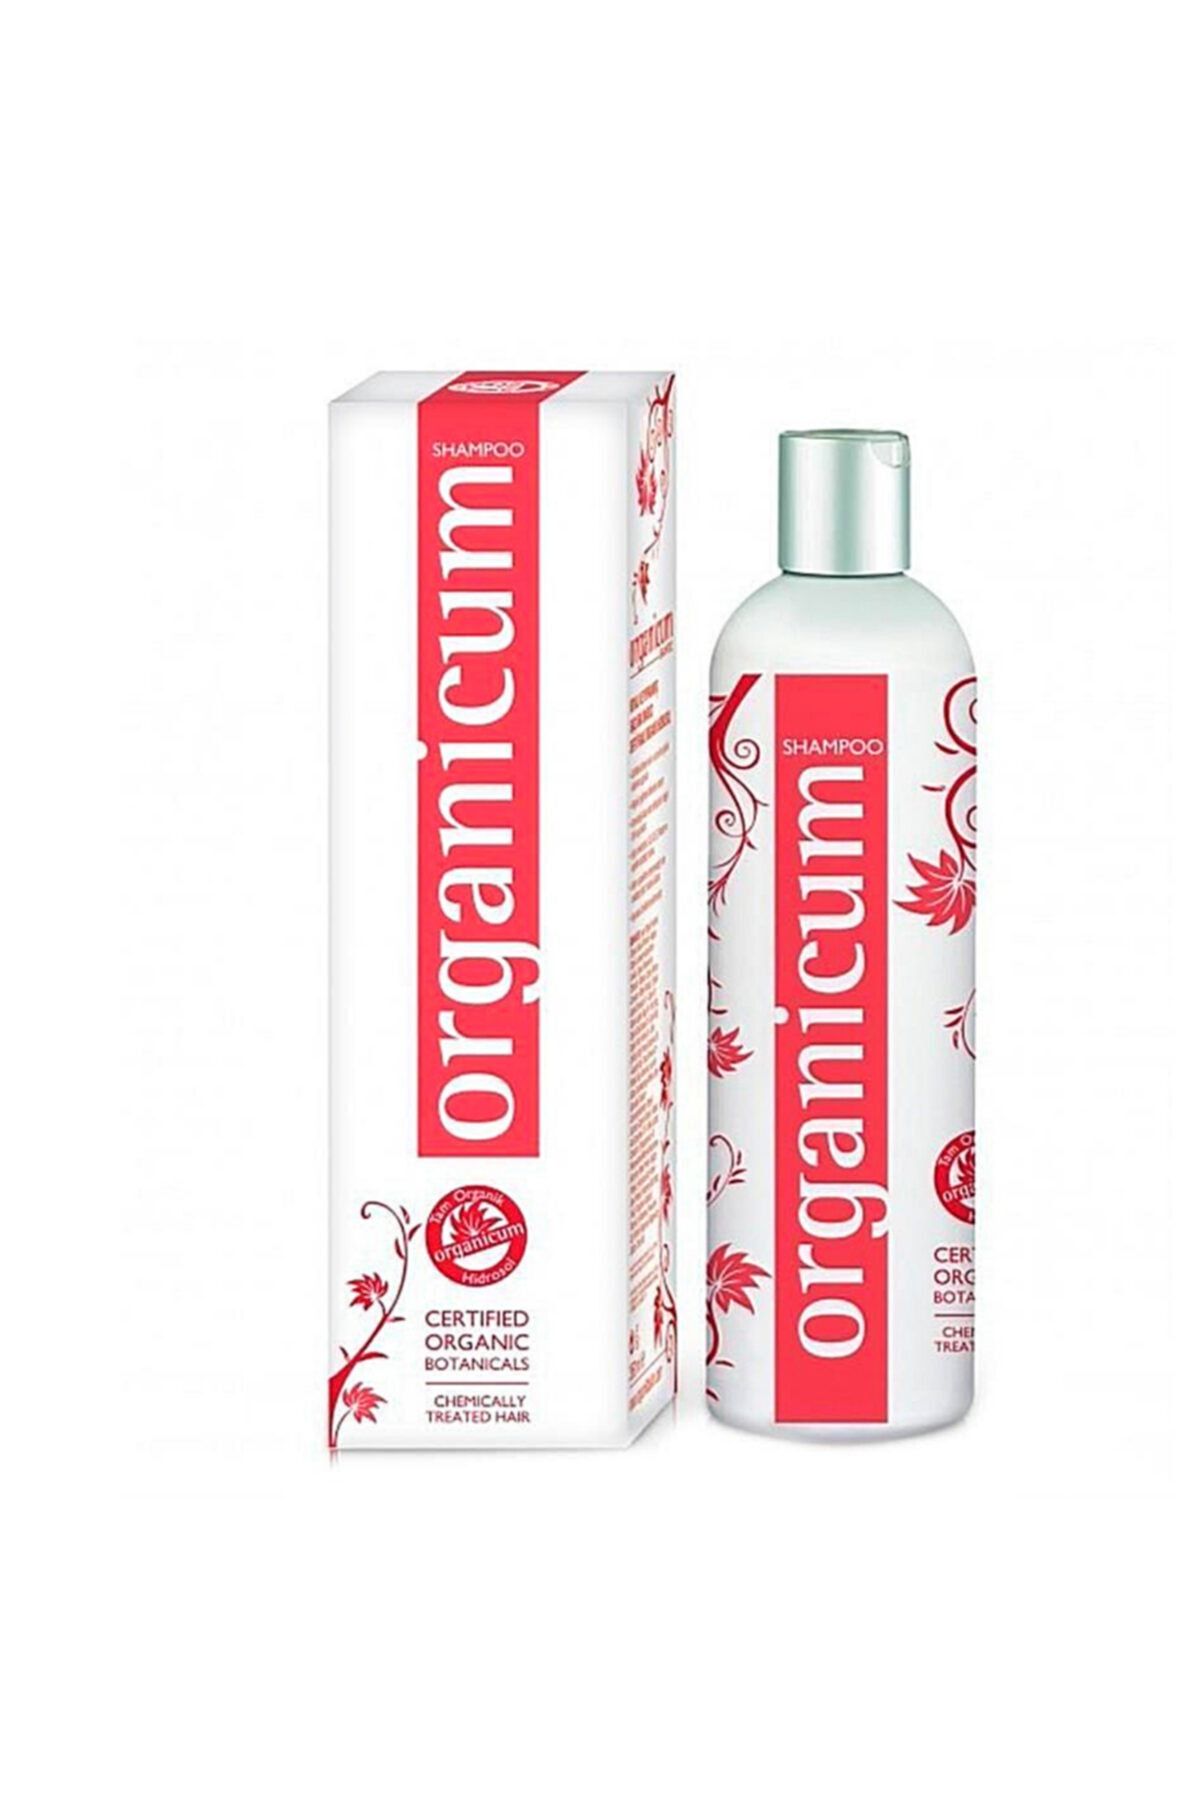 Organicum Boyalı Saçlara Organik Şampuan 350 ml X 3 adet 63357948320